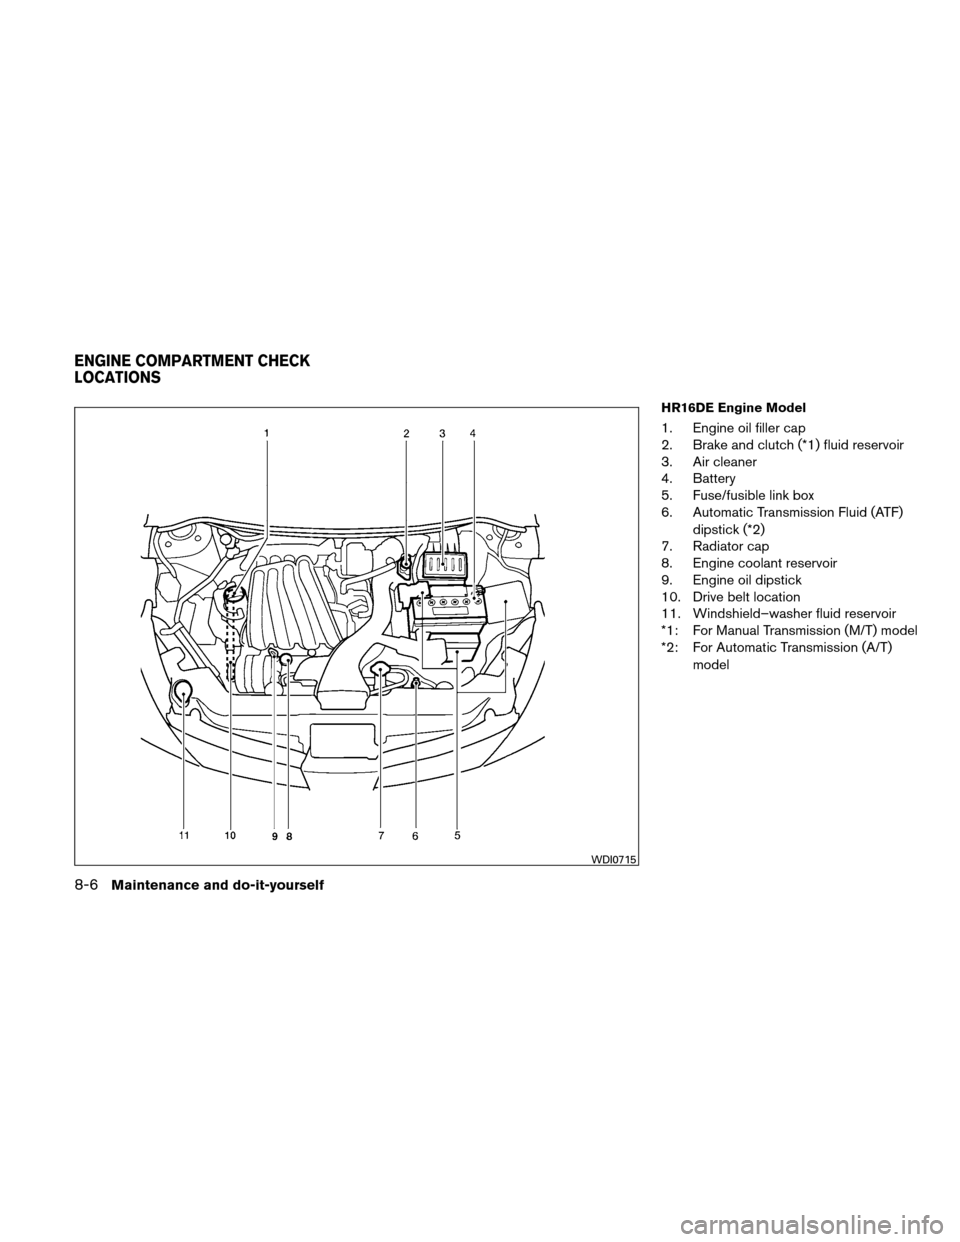 NISSAN VERSA HATCHBACK 2010 1.G Owners Manual HR16DE Engine Model
1. Engine oil filler cap
2. Brake and clutch (*1) fluid reservoir
3. Air cleaner
4. Battery
5. Fuse/fusible link box
6. Automatic Transmission Fluid (ATF)dipstick (*2)
7. Radiator 